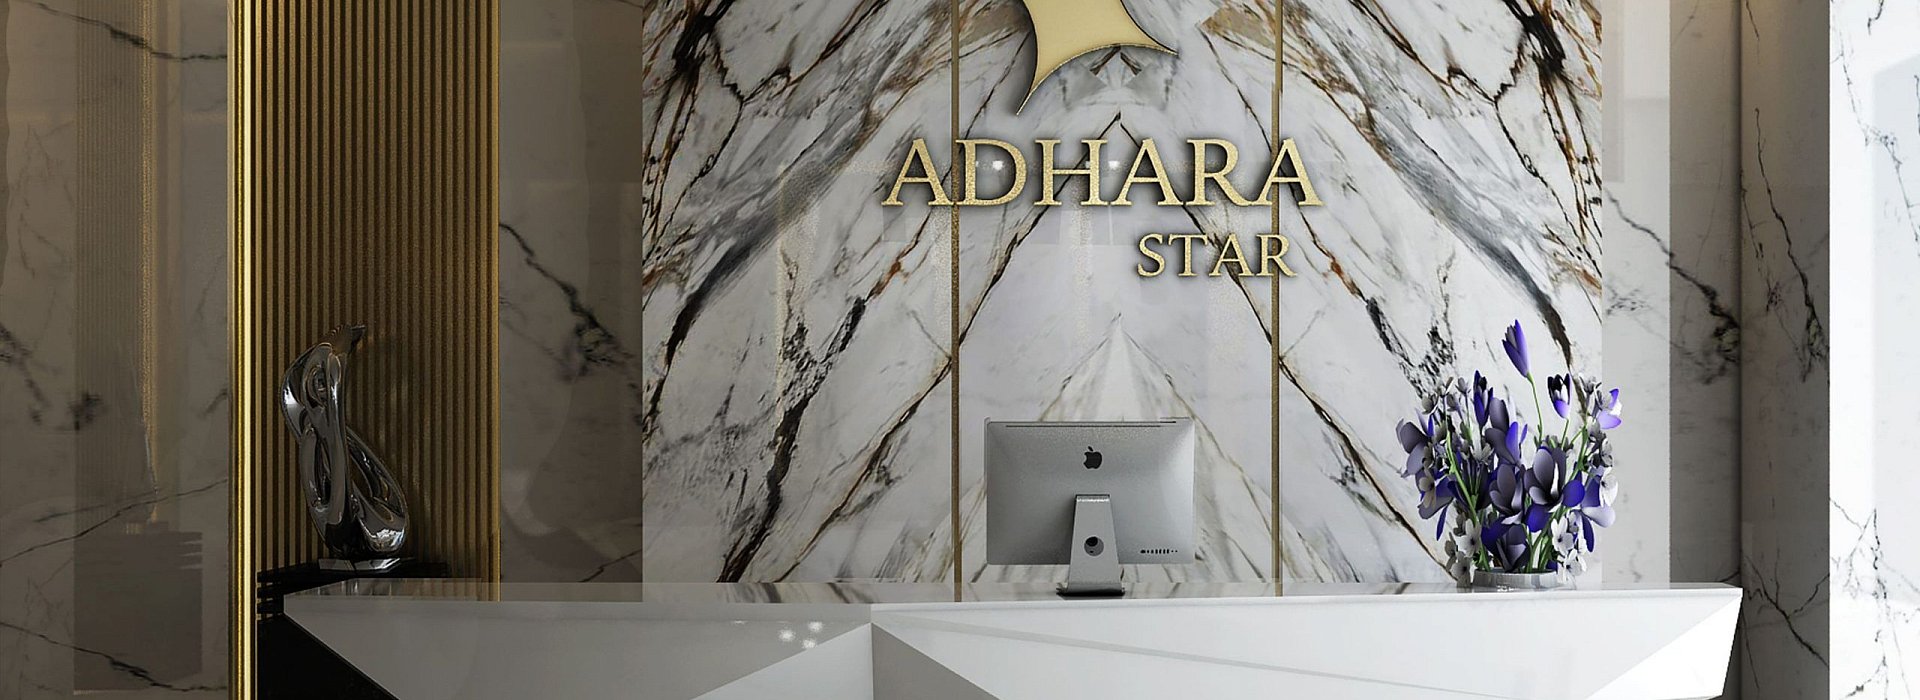 Adhara Star